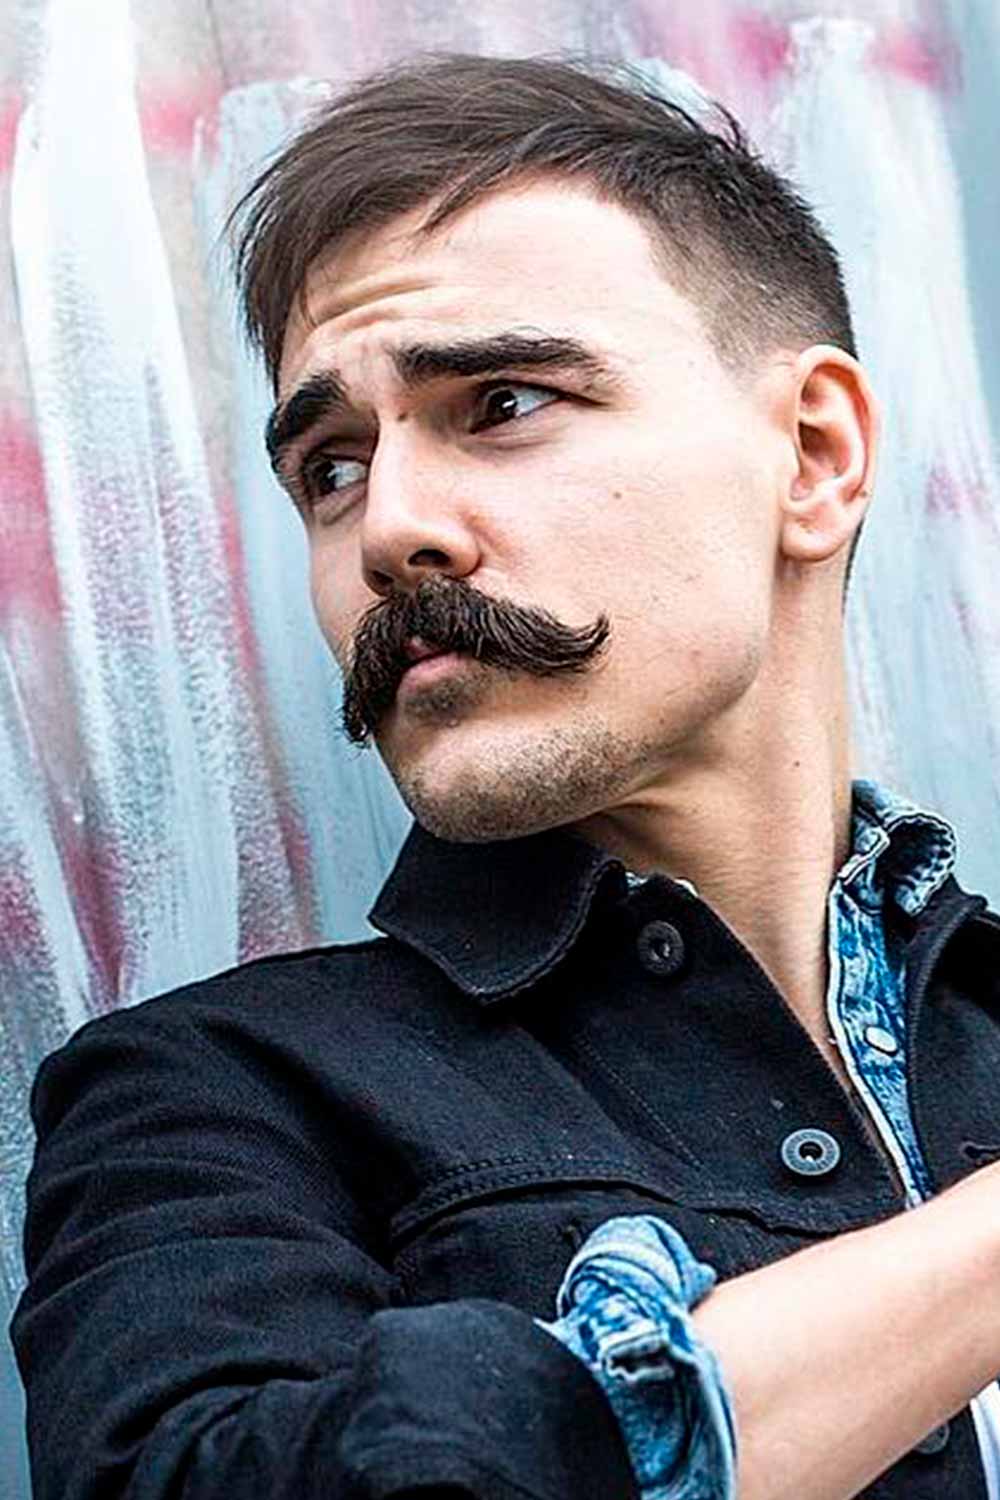 Porn Staches #mustache #moustache #mustachestyles #mustaches